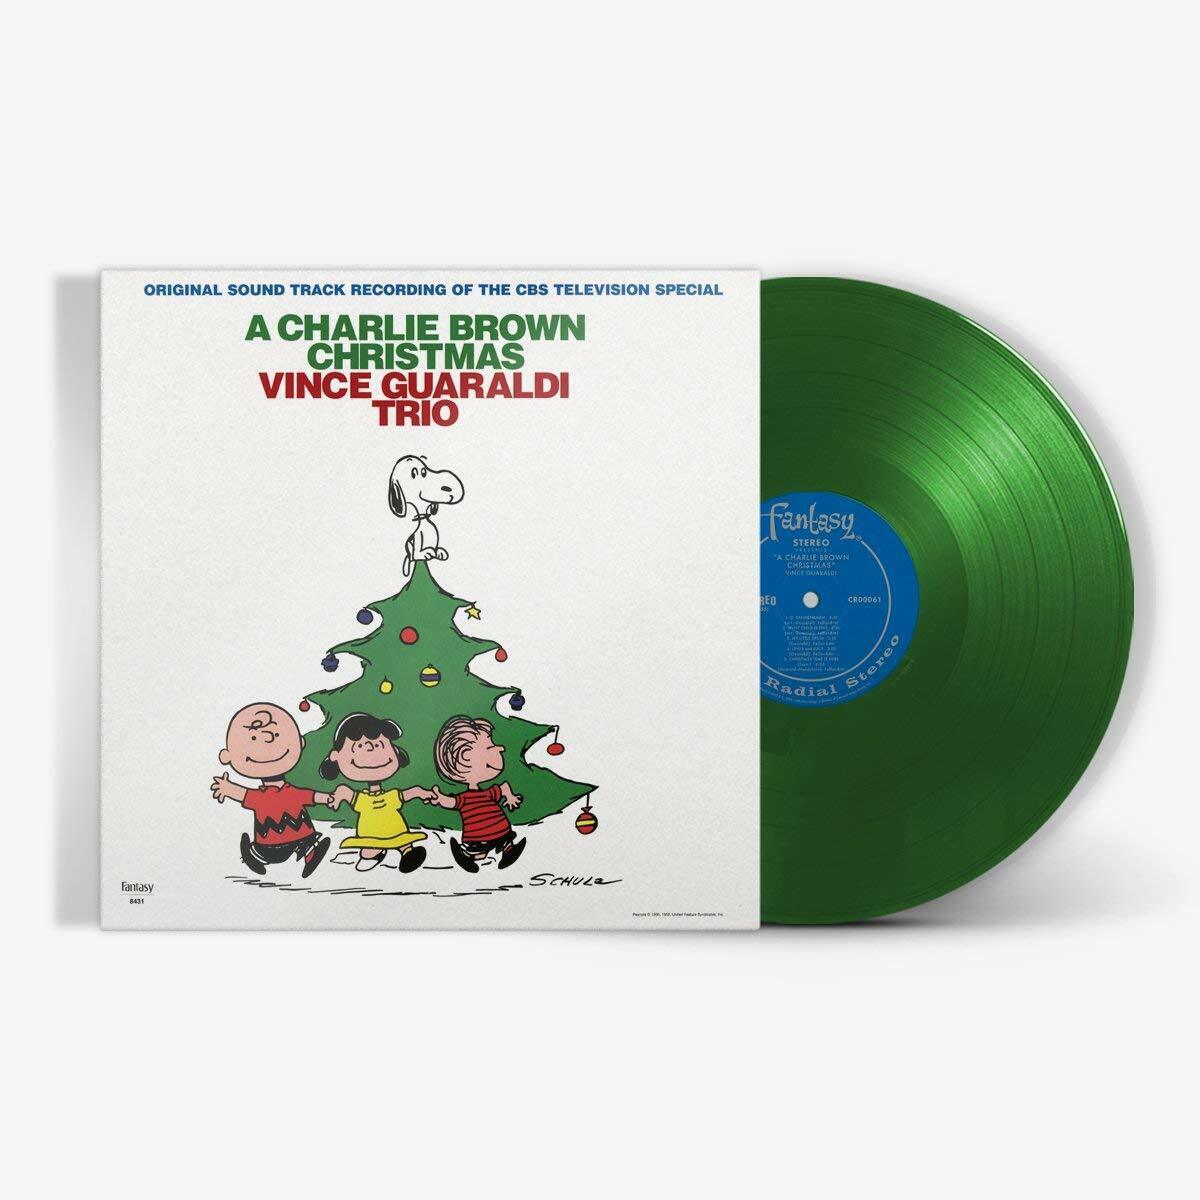 Vince Guaraldi Trio - A Charlie Brown Christmas Green Vinyl LP Record